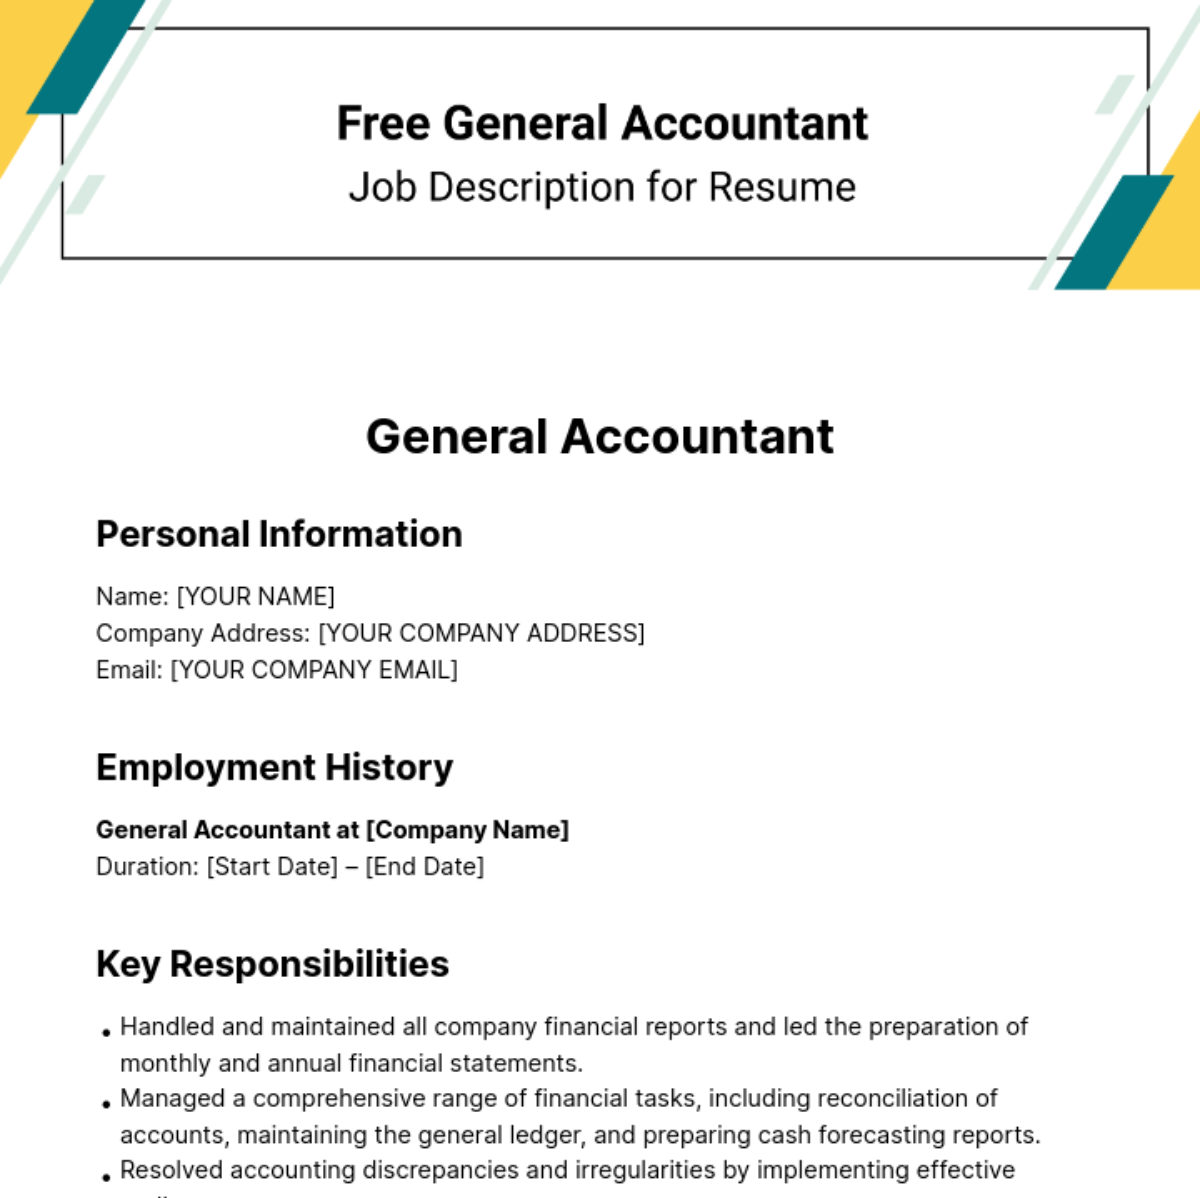 Free General Accountant Job Description for Resume Template